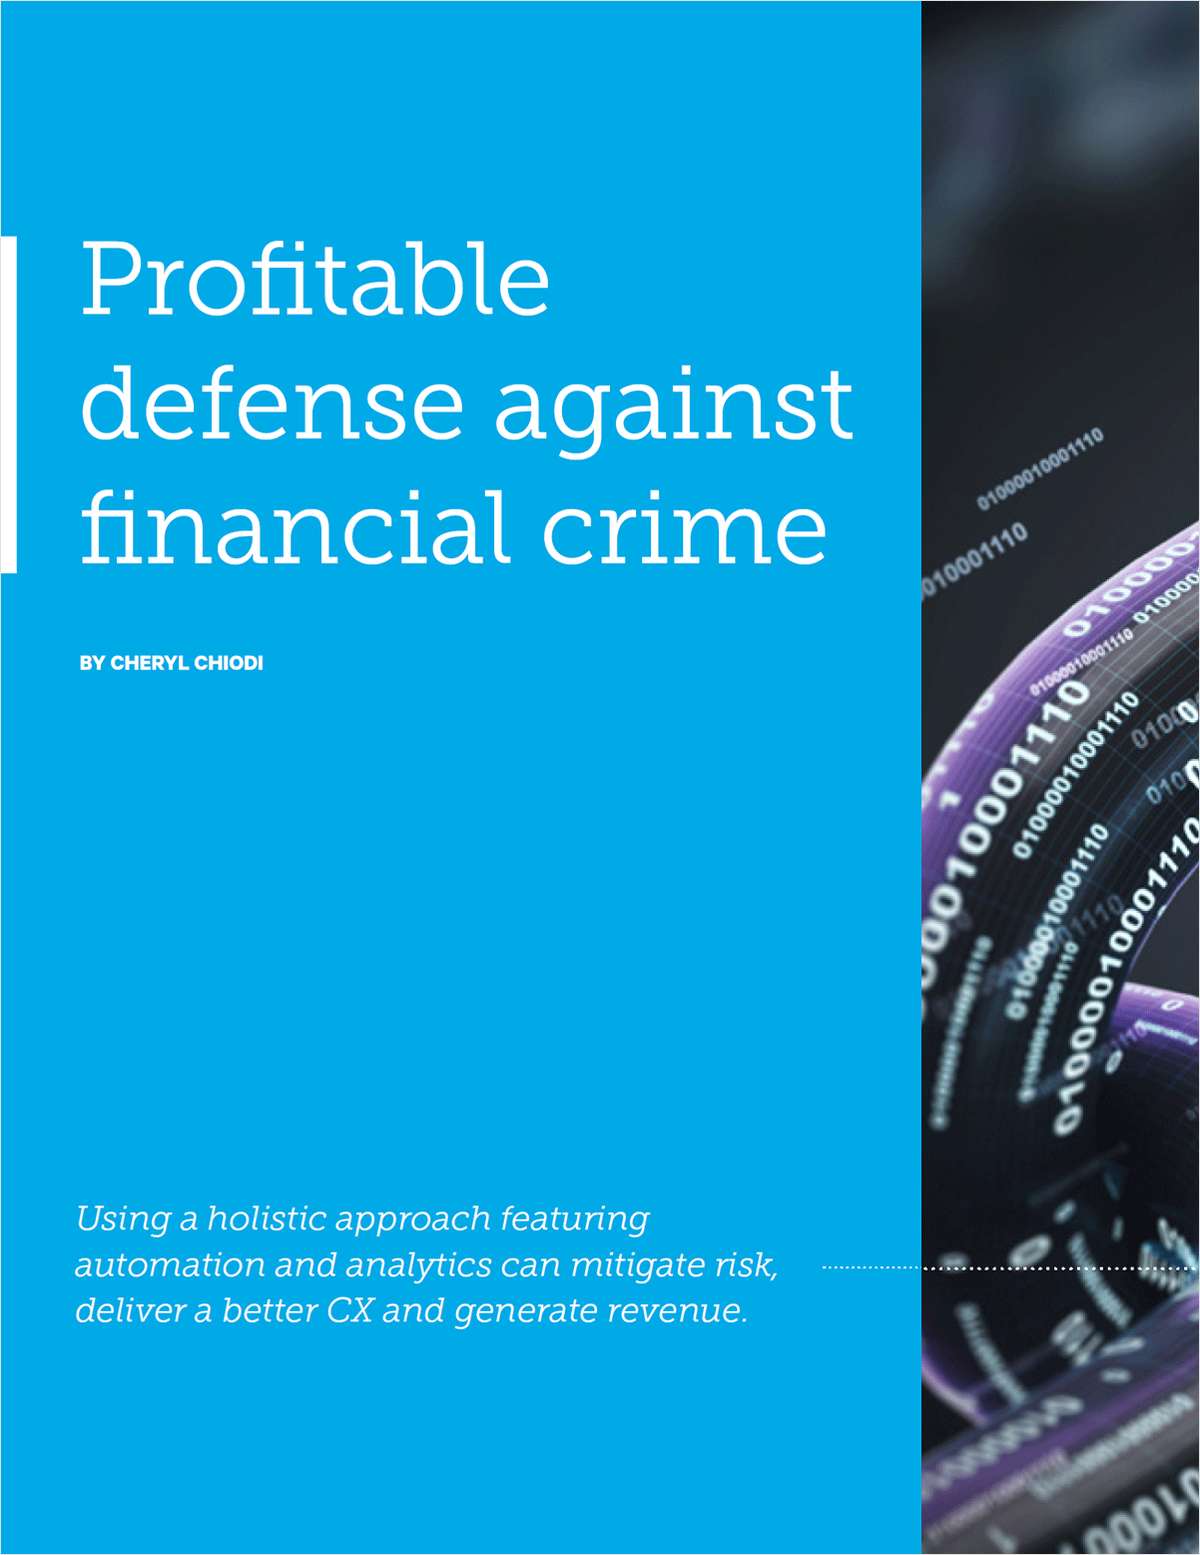 BAI Report: Profitable Defense Against Financial Crime